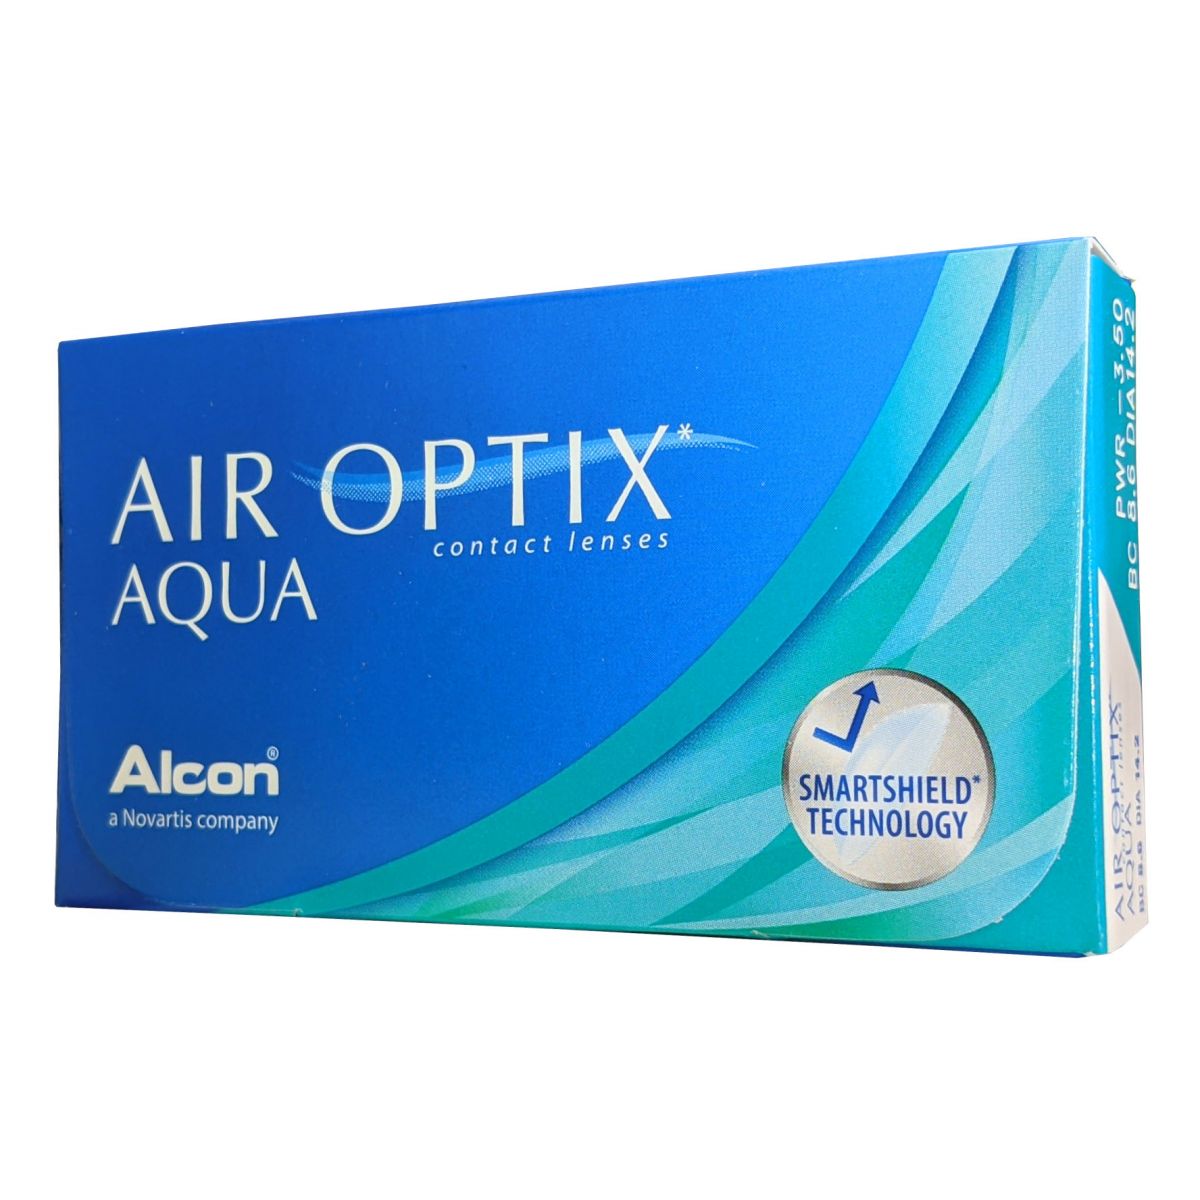 AIR OPTIX AQUA MONTHLY DISPOSABLE SILICON HYDROGEL CONTACT LENSES (3 LENSES)